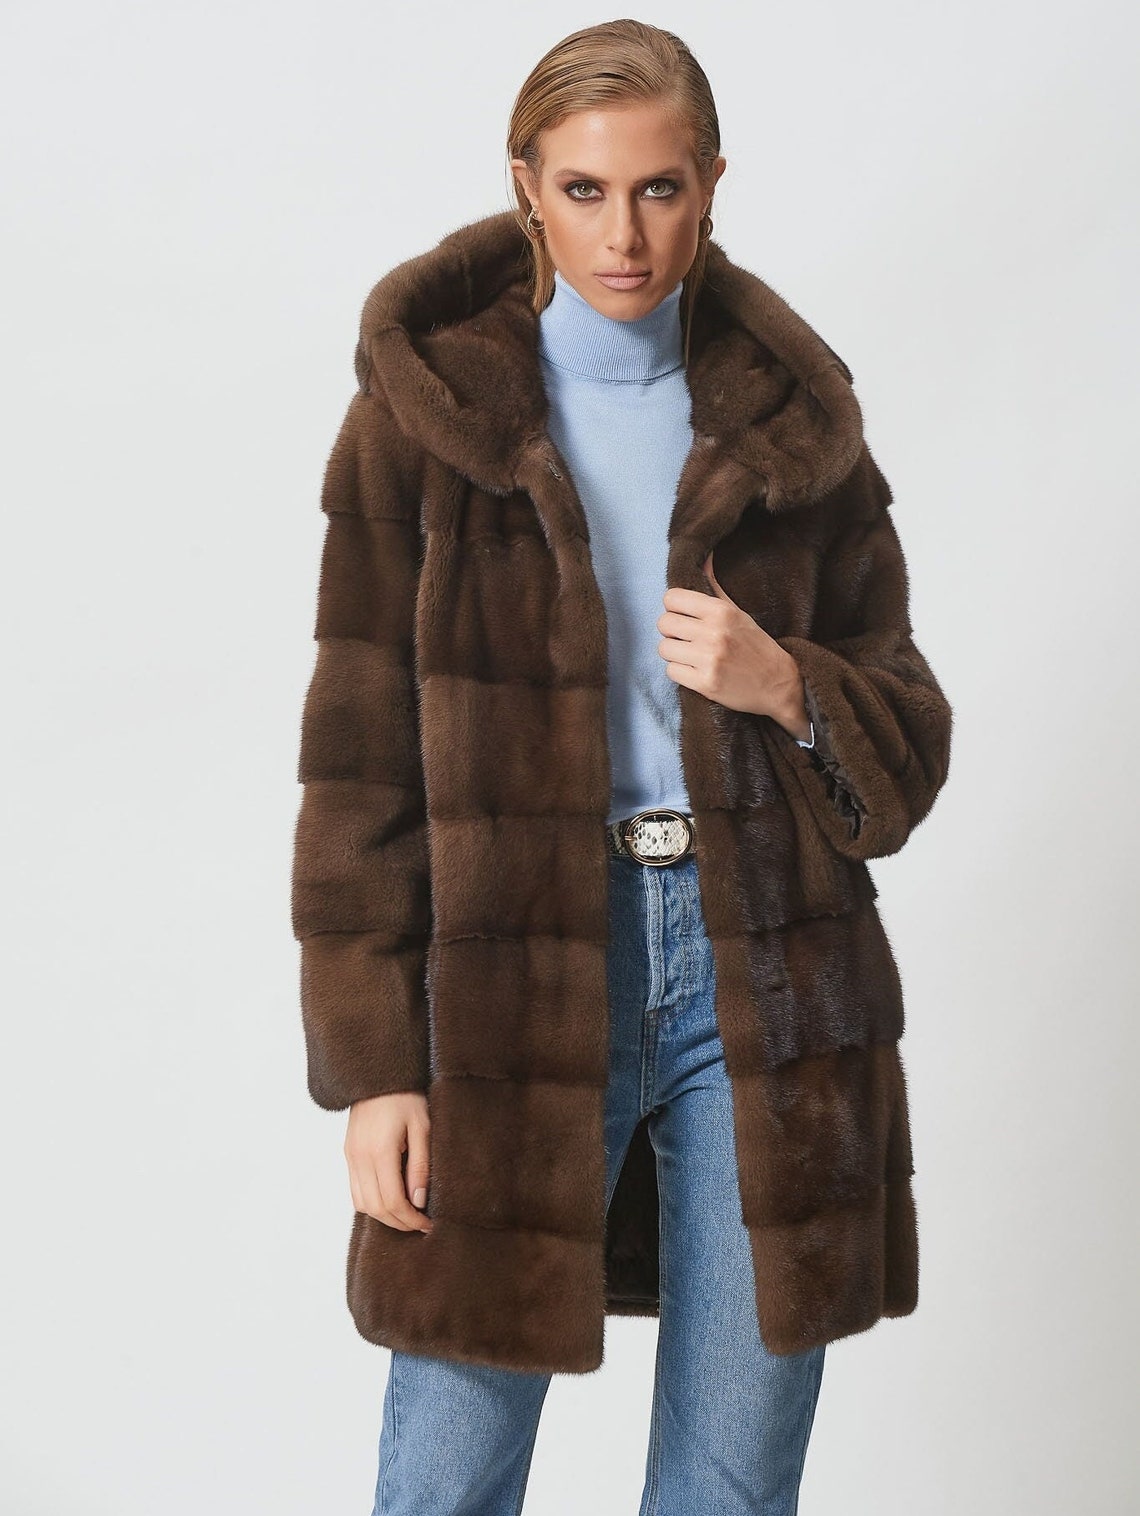 Brown Mink Fur Jacket With Hood Made of 100% Real Fur - Etsy